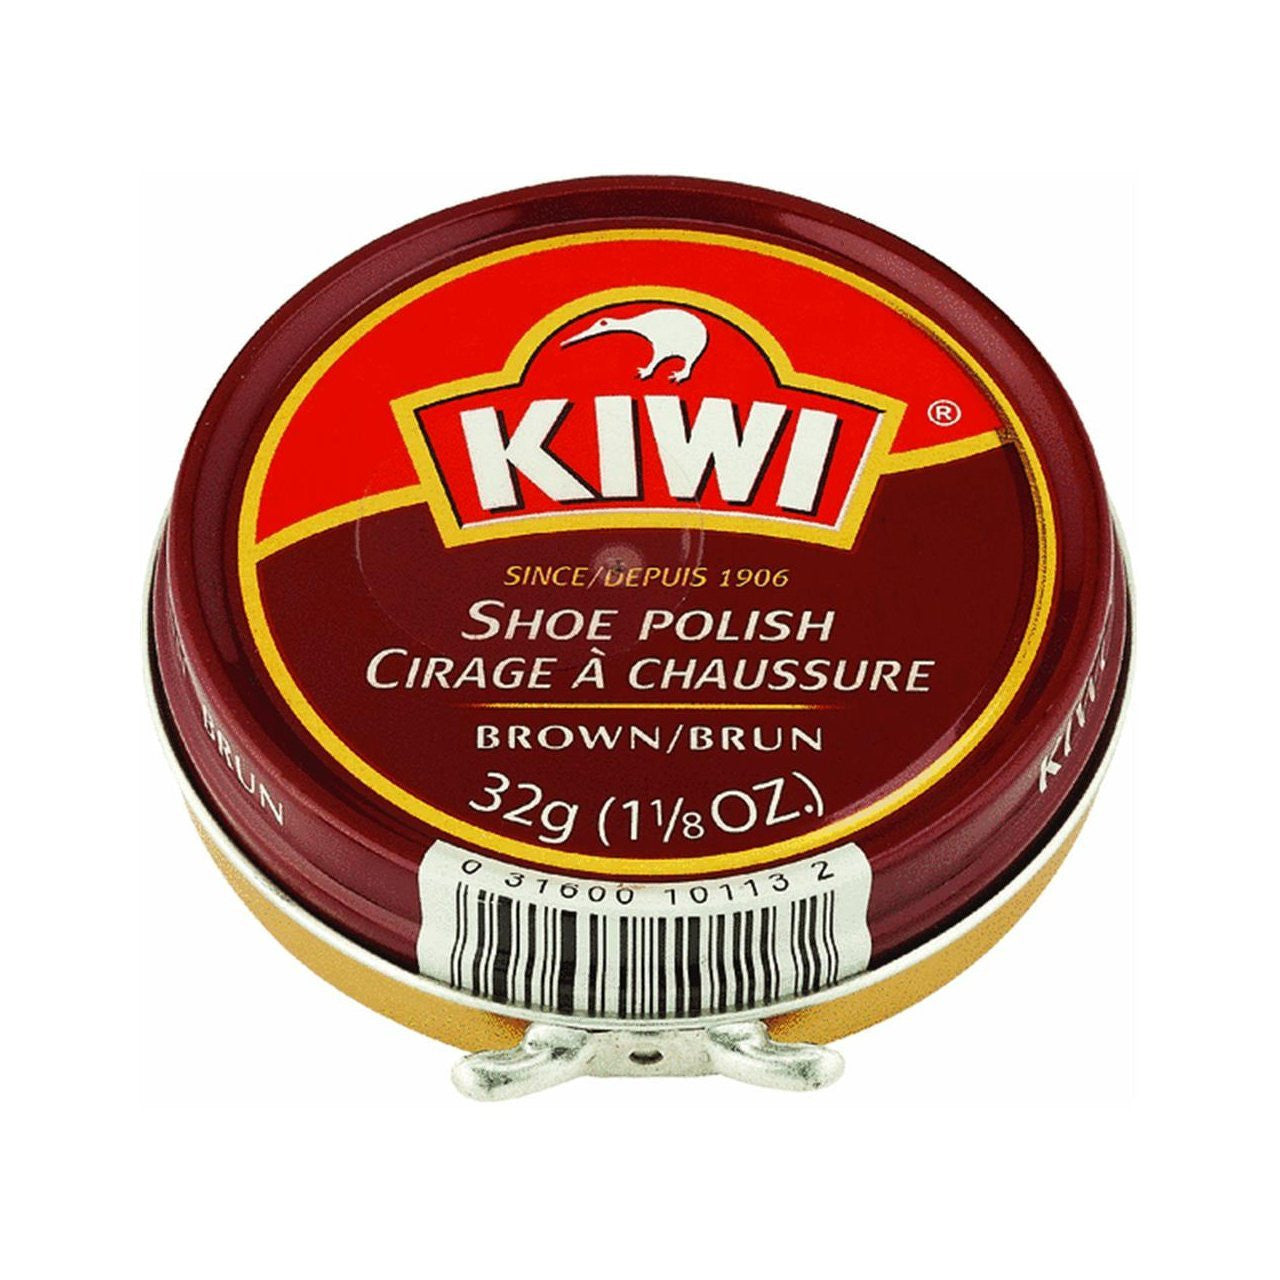  KIWI Liquid Instant Wax, 2.5 fl oz, Black, (Pack - 6) :  Clothing, Shoes & Jewelry